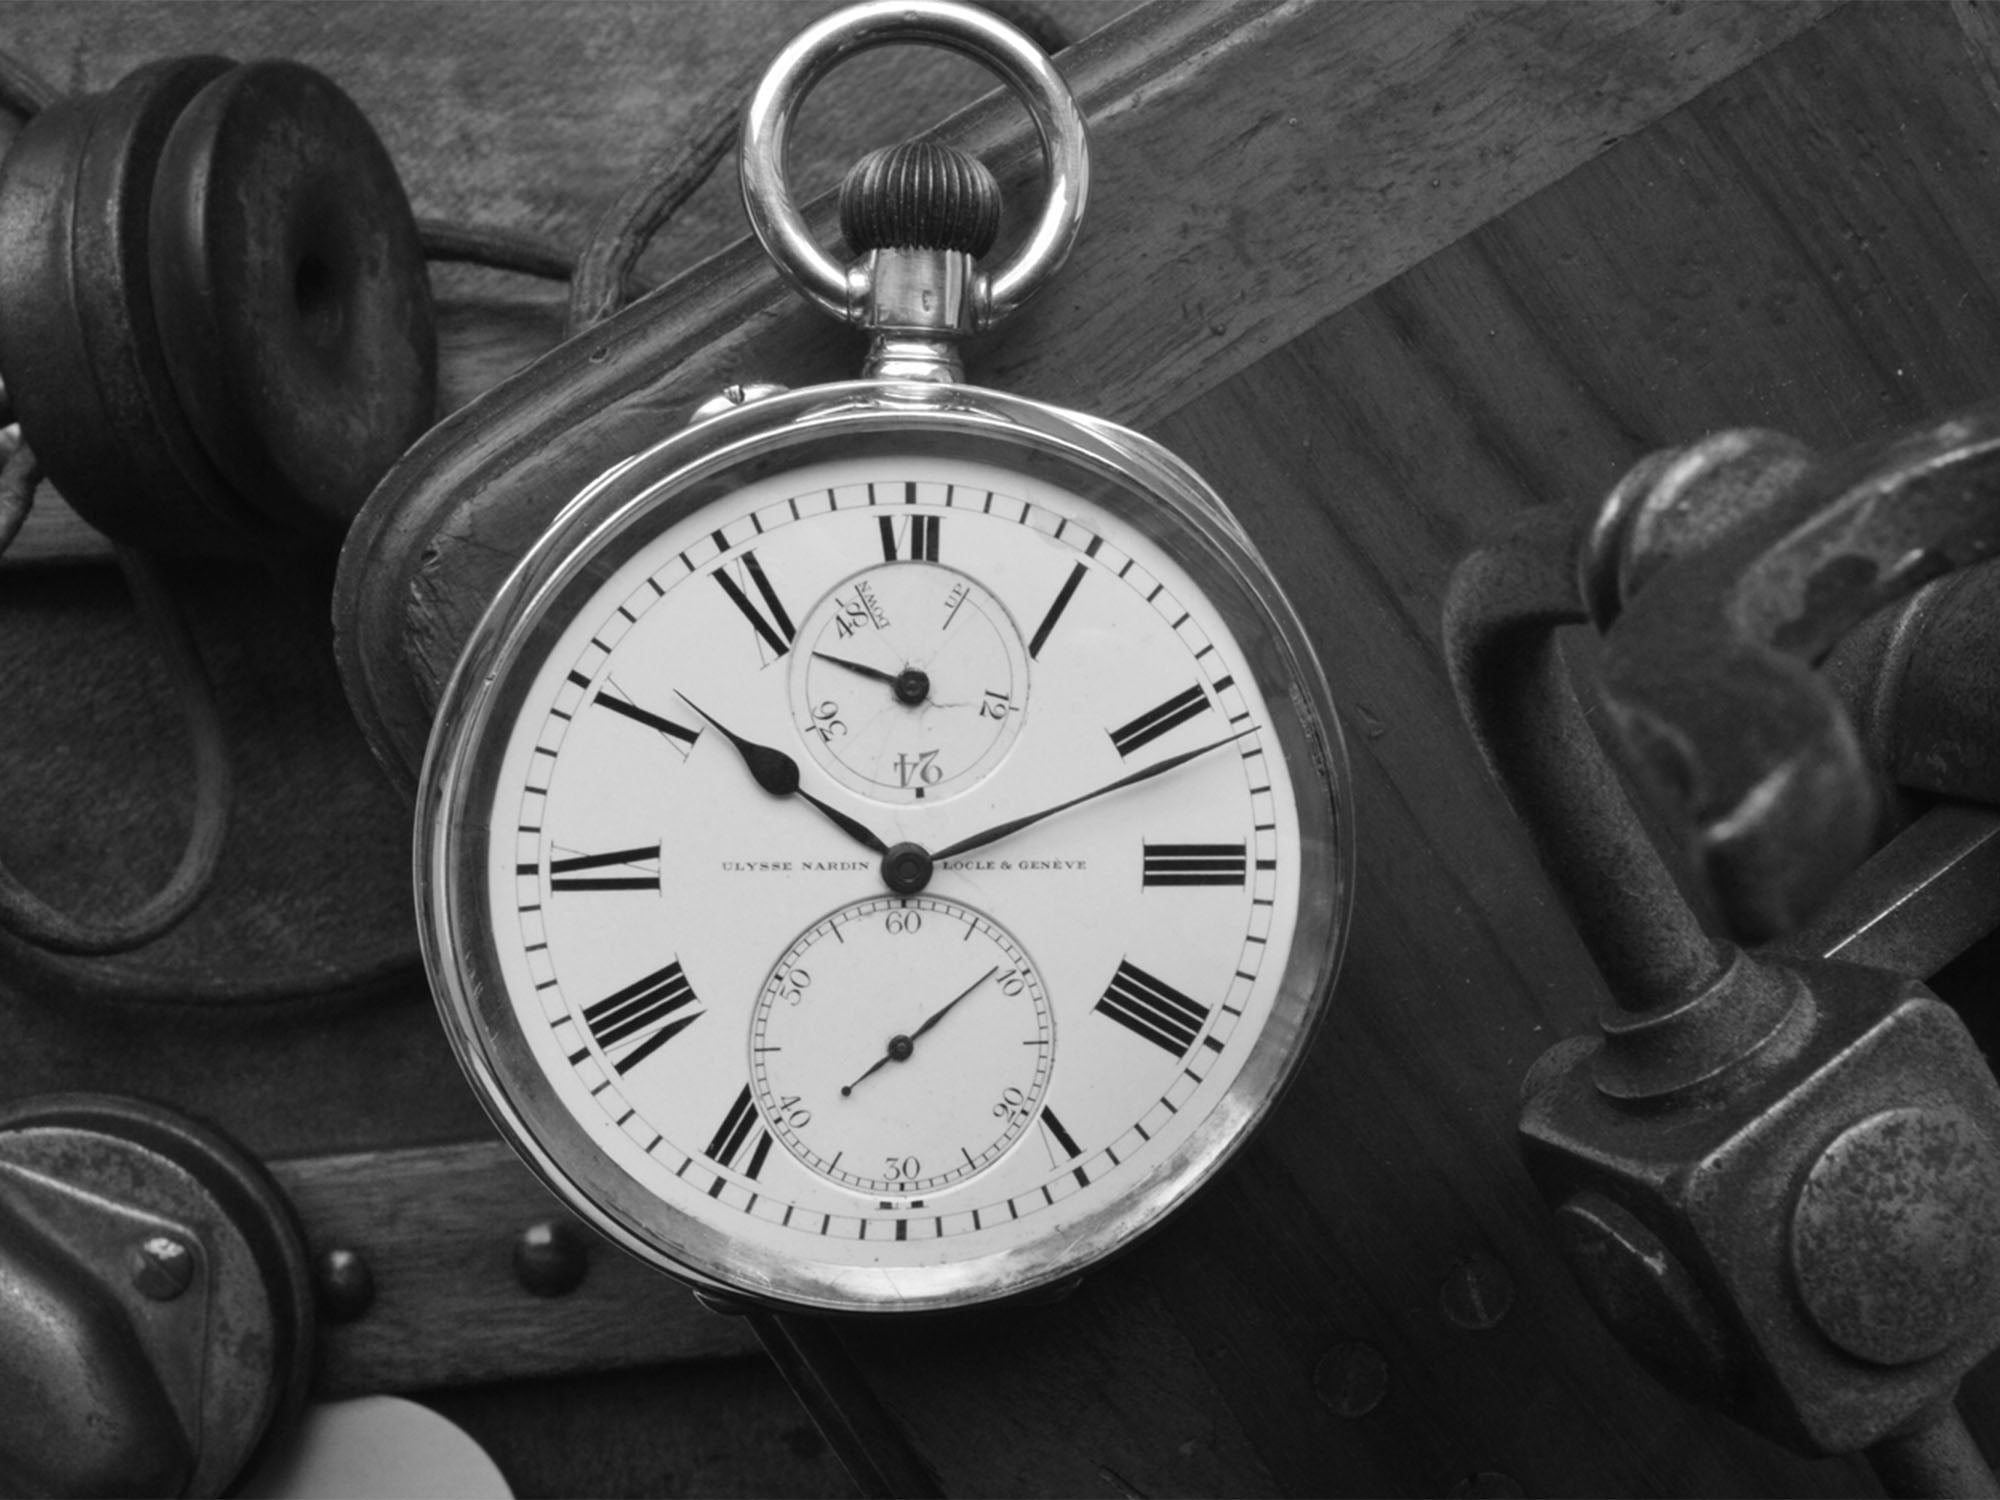 Ulysse Nardin pocket chronometer